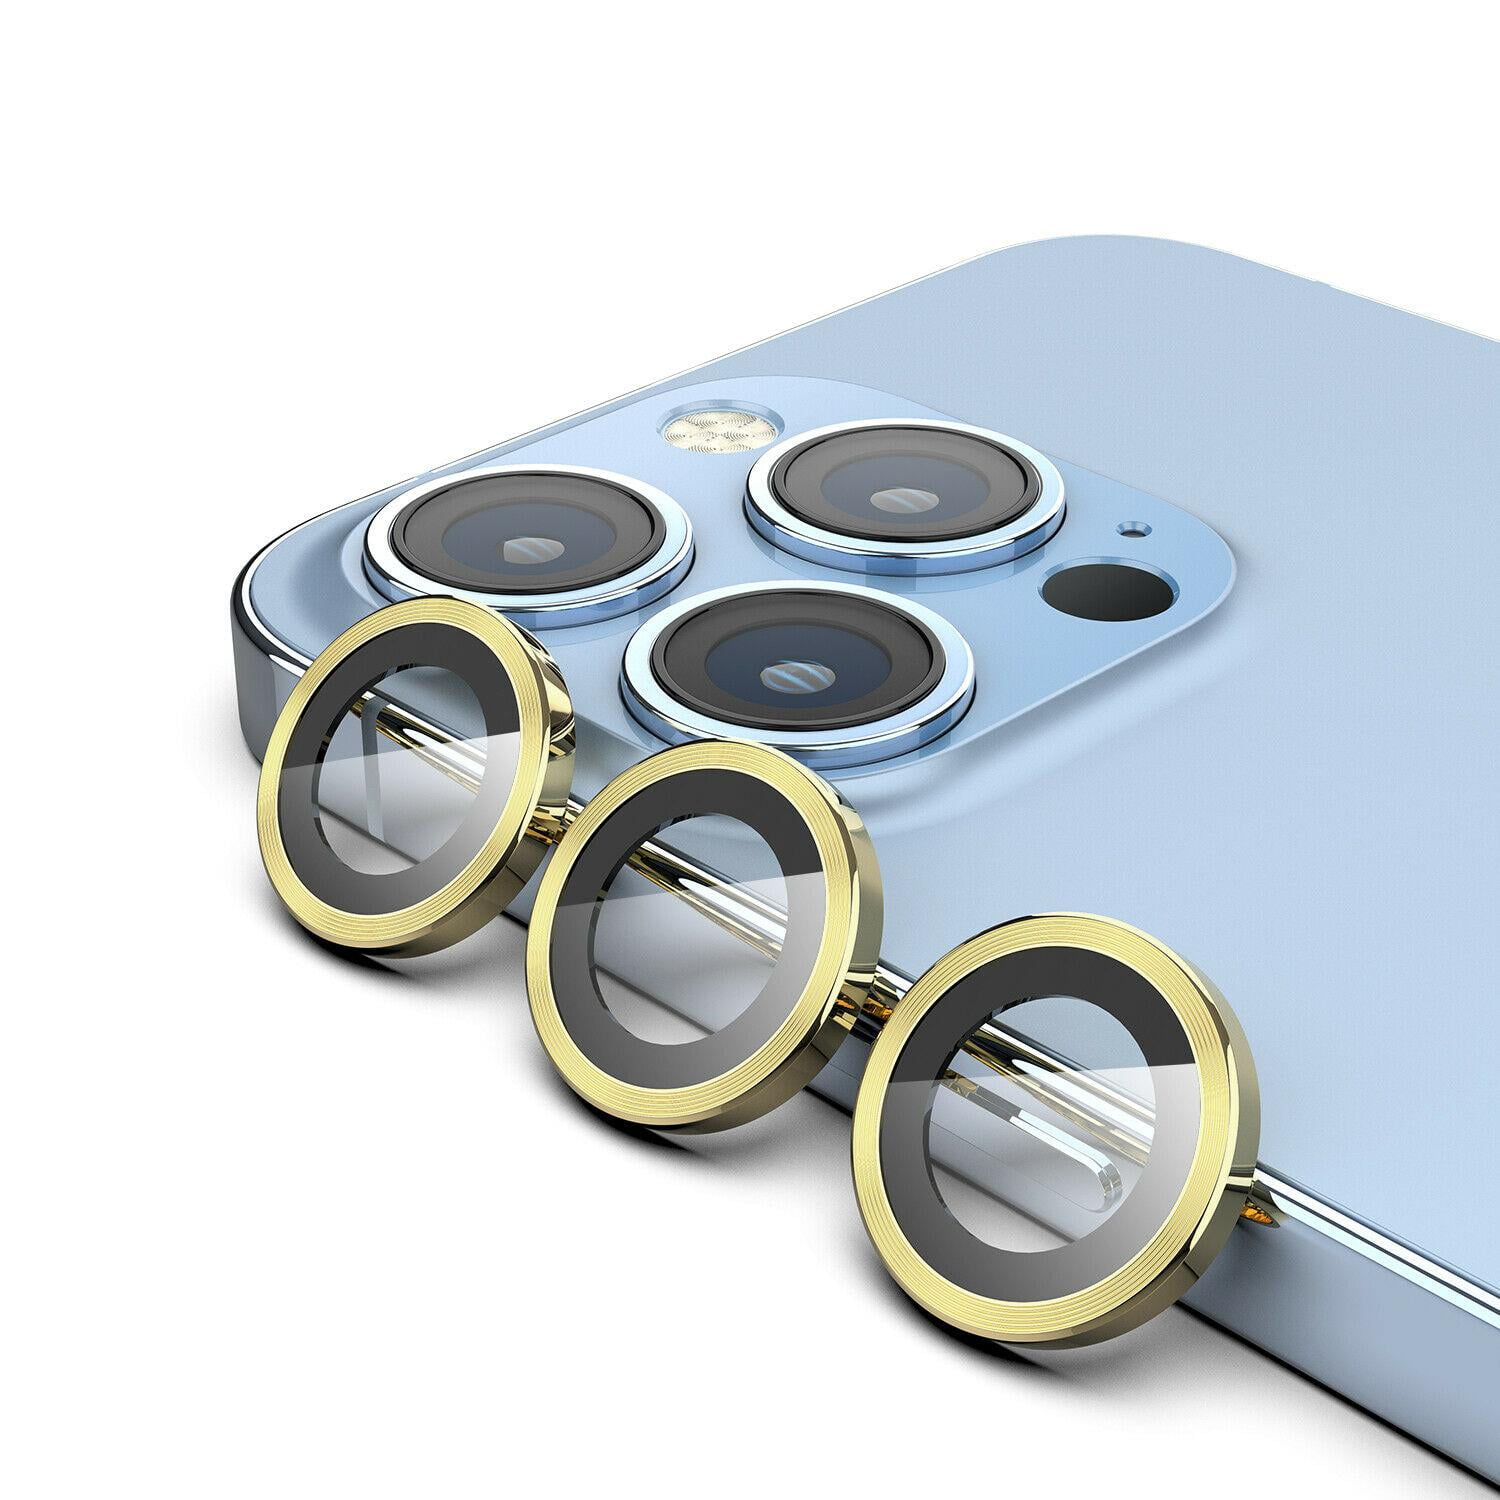 Vidrio de Cámara Ringke para iPhone 15 Pro Max Lens Glass Black - SmartPro